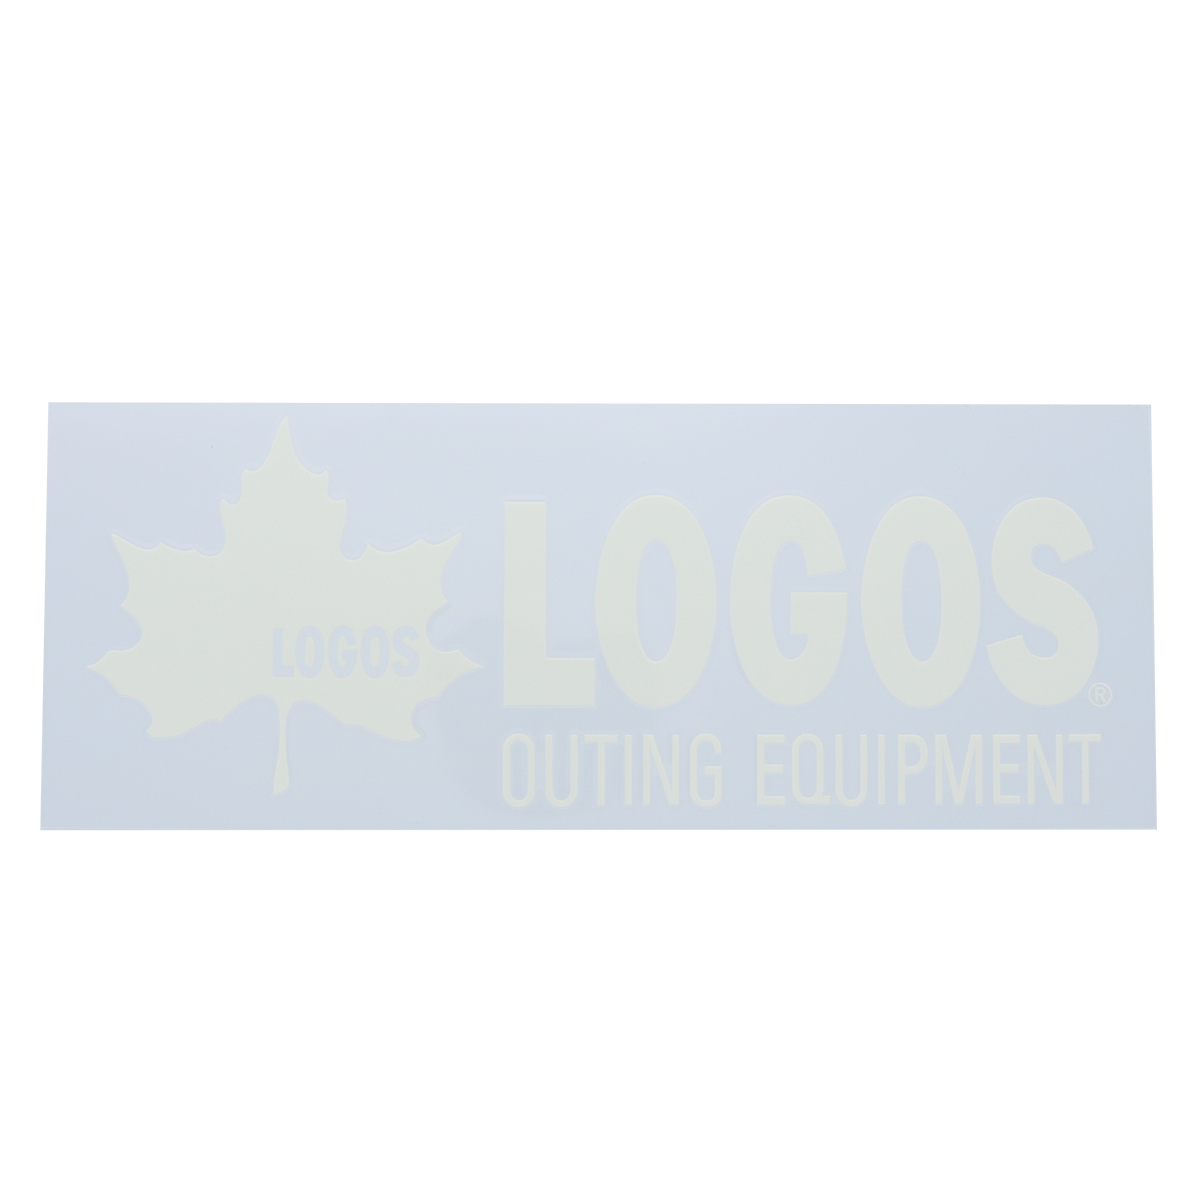 LOGOS カッティングステッカー|コレクション|ディスプレイ|ステッカー 